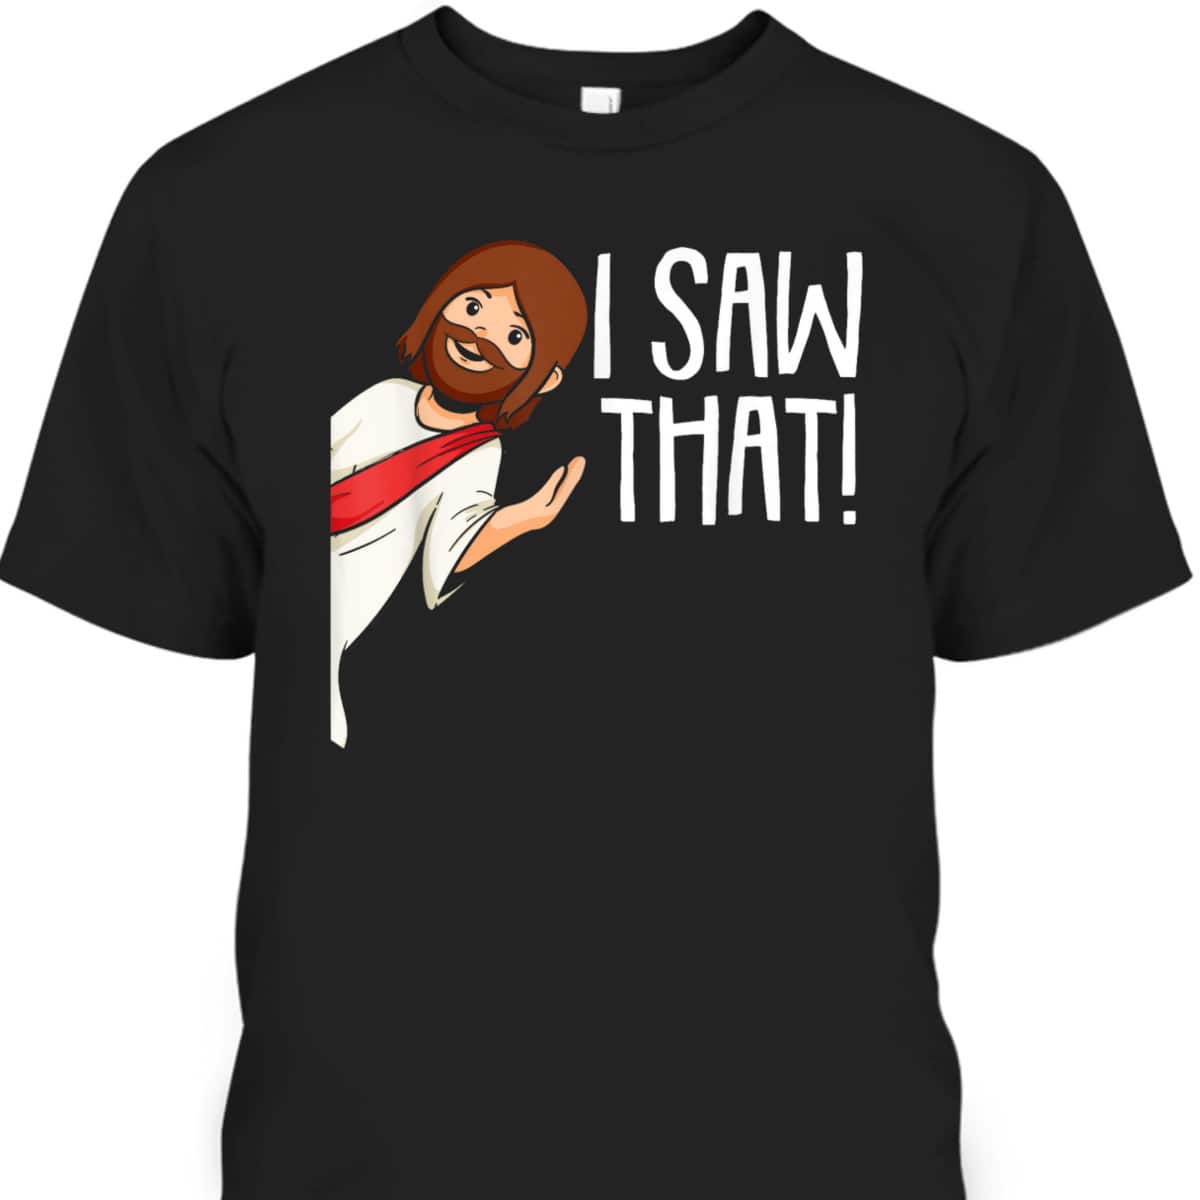 I Saw That Jesus Christmas Funny Meme Religious Christian T-Shirt